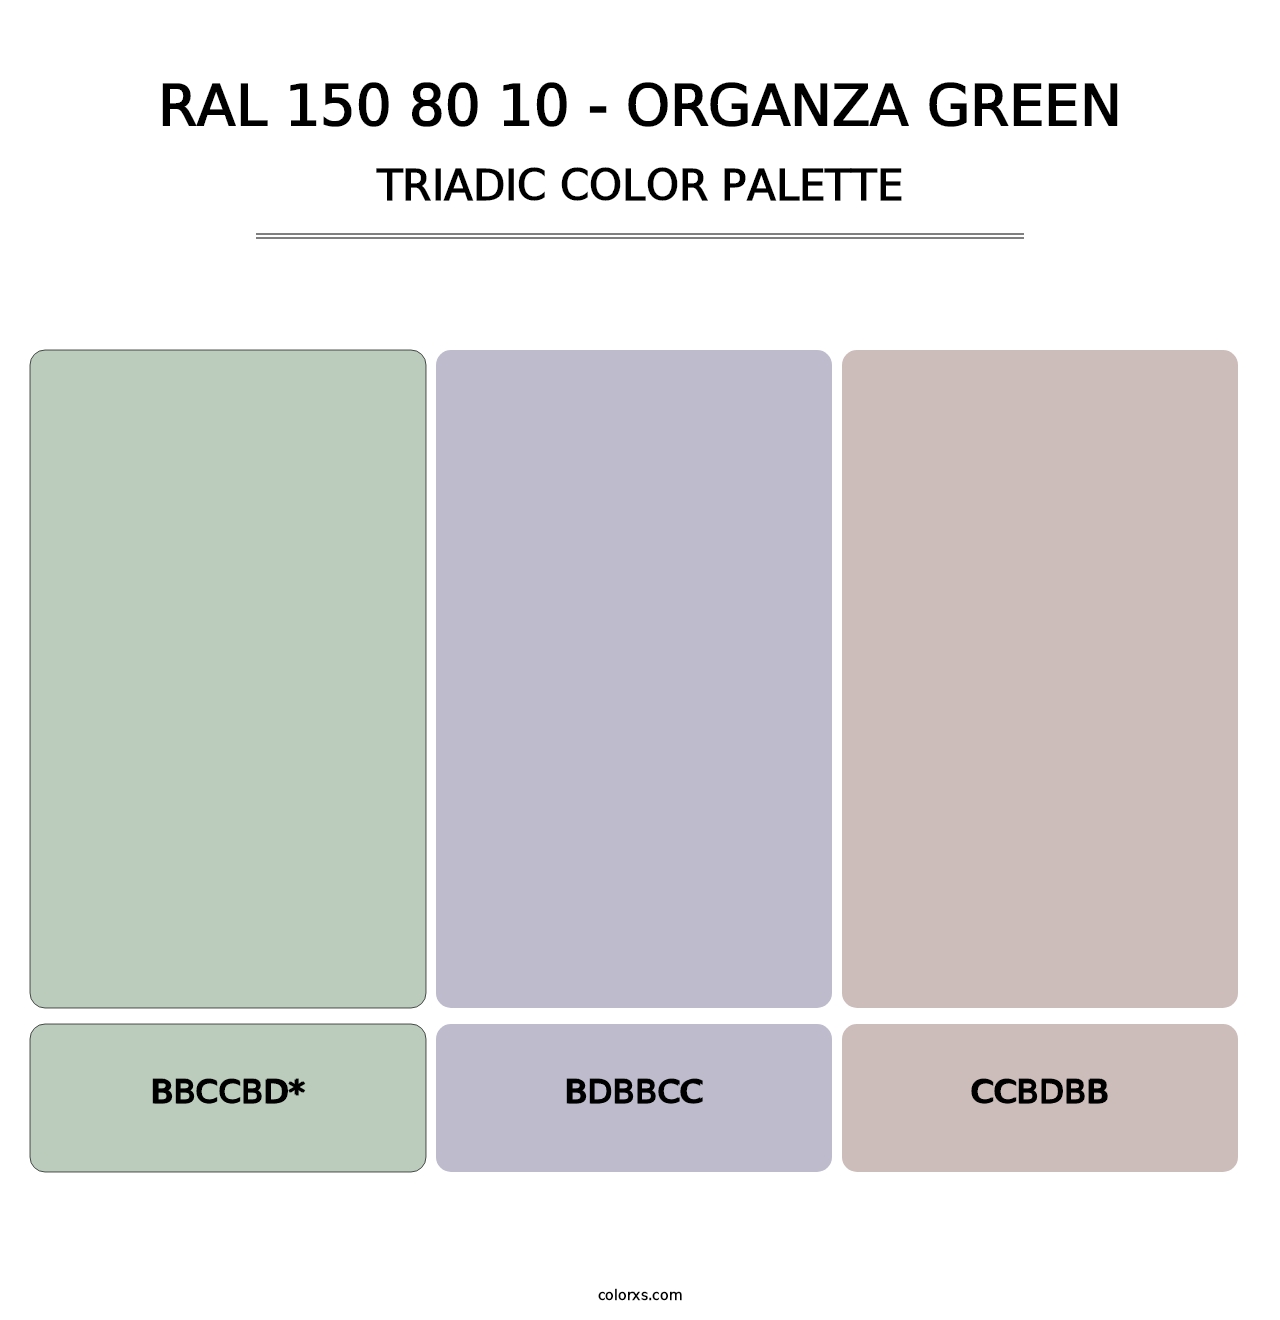 RAL 150 80 10 - Organza Green - Triadic Color Palette